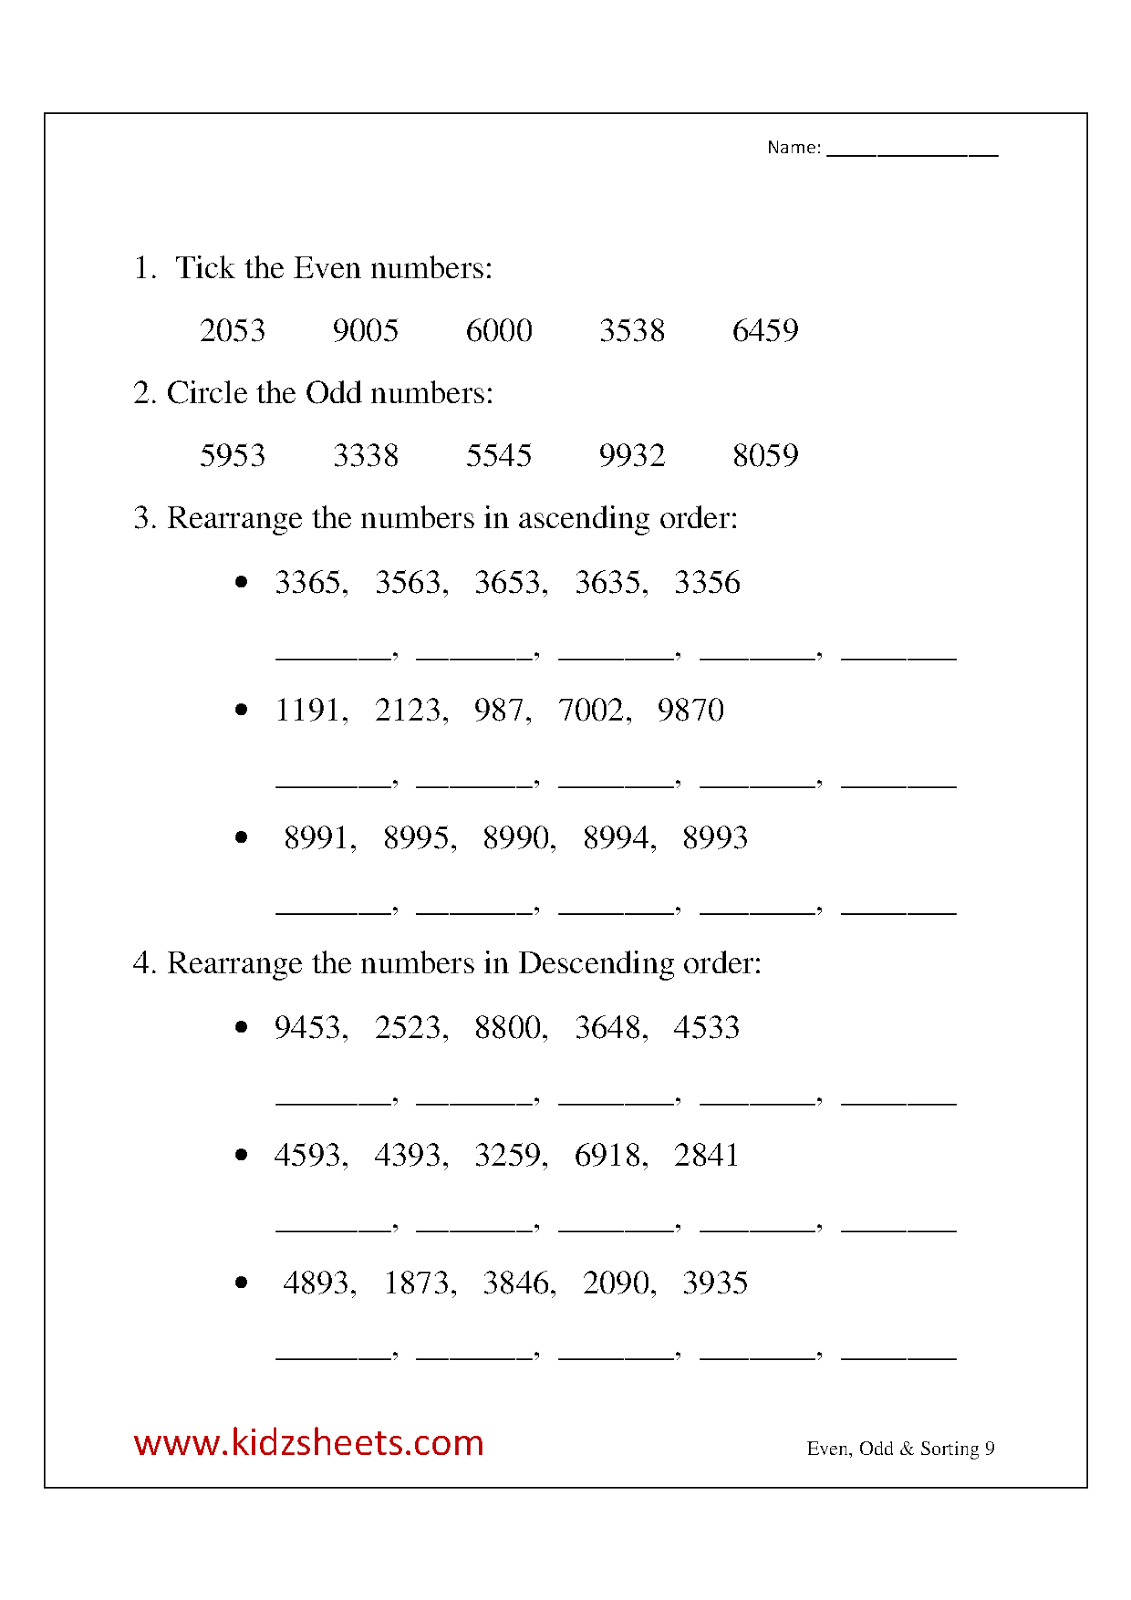 kidz-worksheets-third-grade-even-odd-sorting-worksheet9